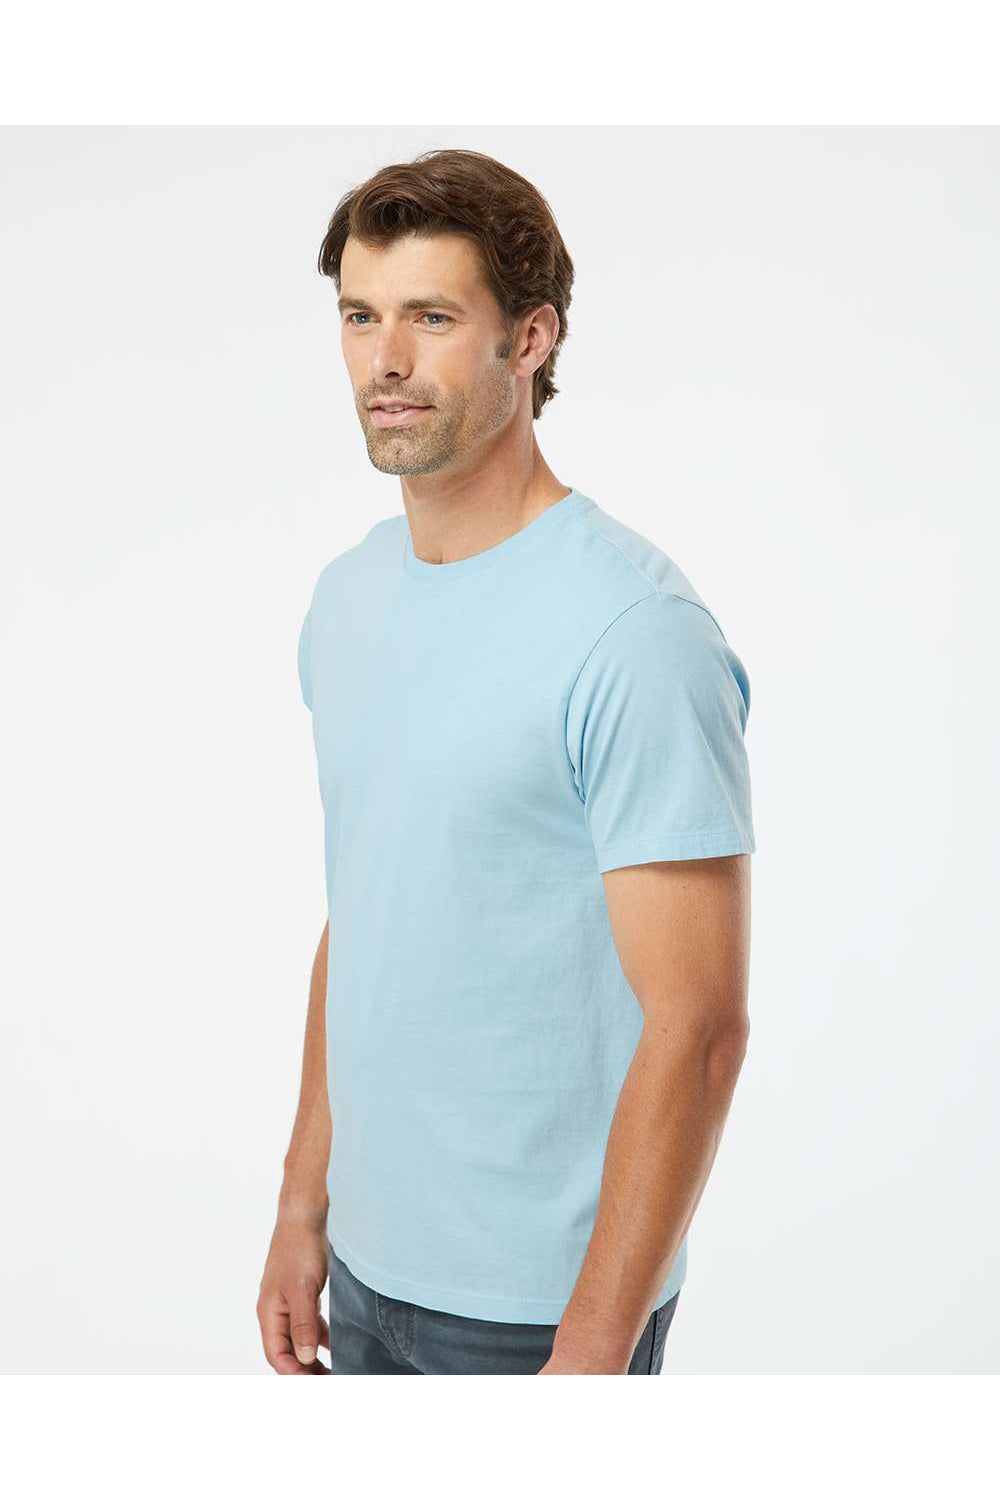 SoftShirts 400 Mens Organic Short Sleeve Crewneck T-Shirt Chambray Blue Model Side